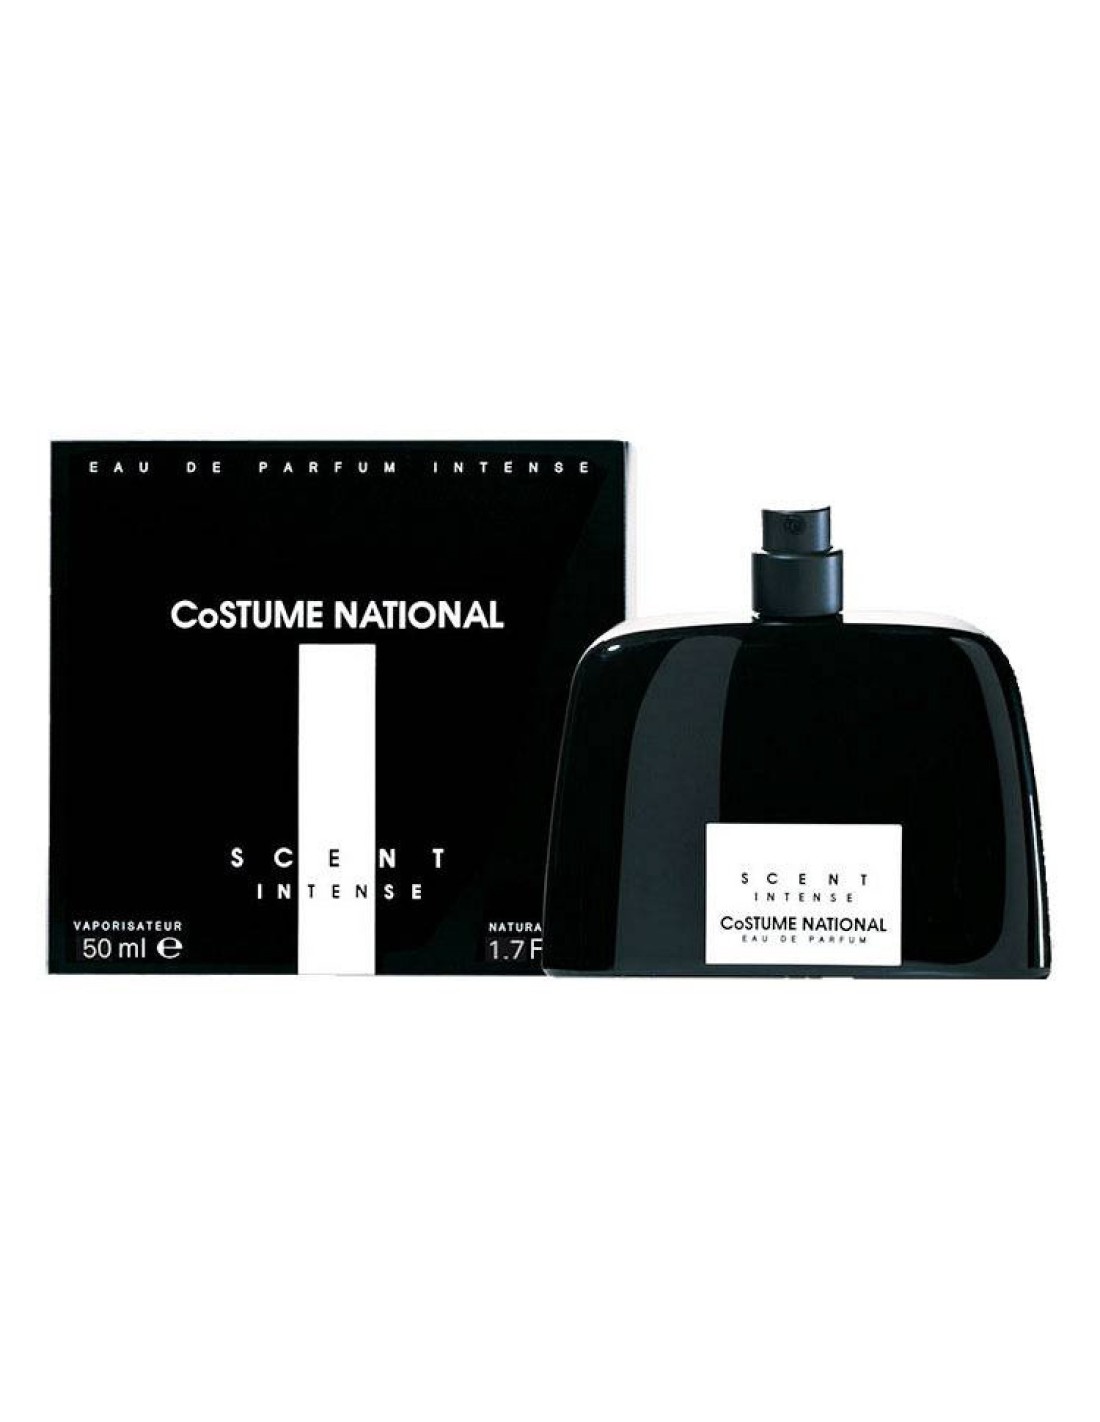 Costume National Scent Intense 50 ml eau de parfum intense